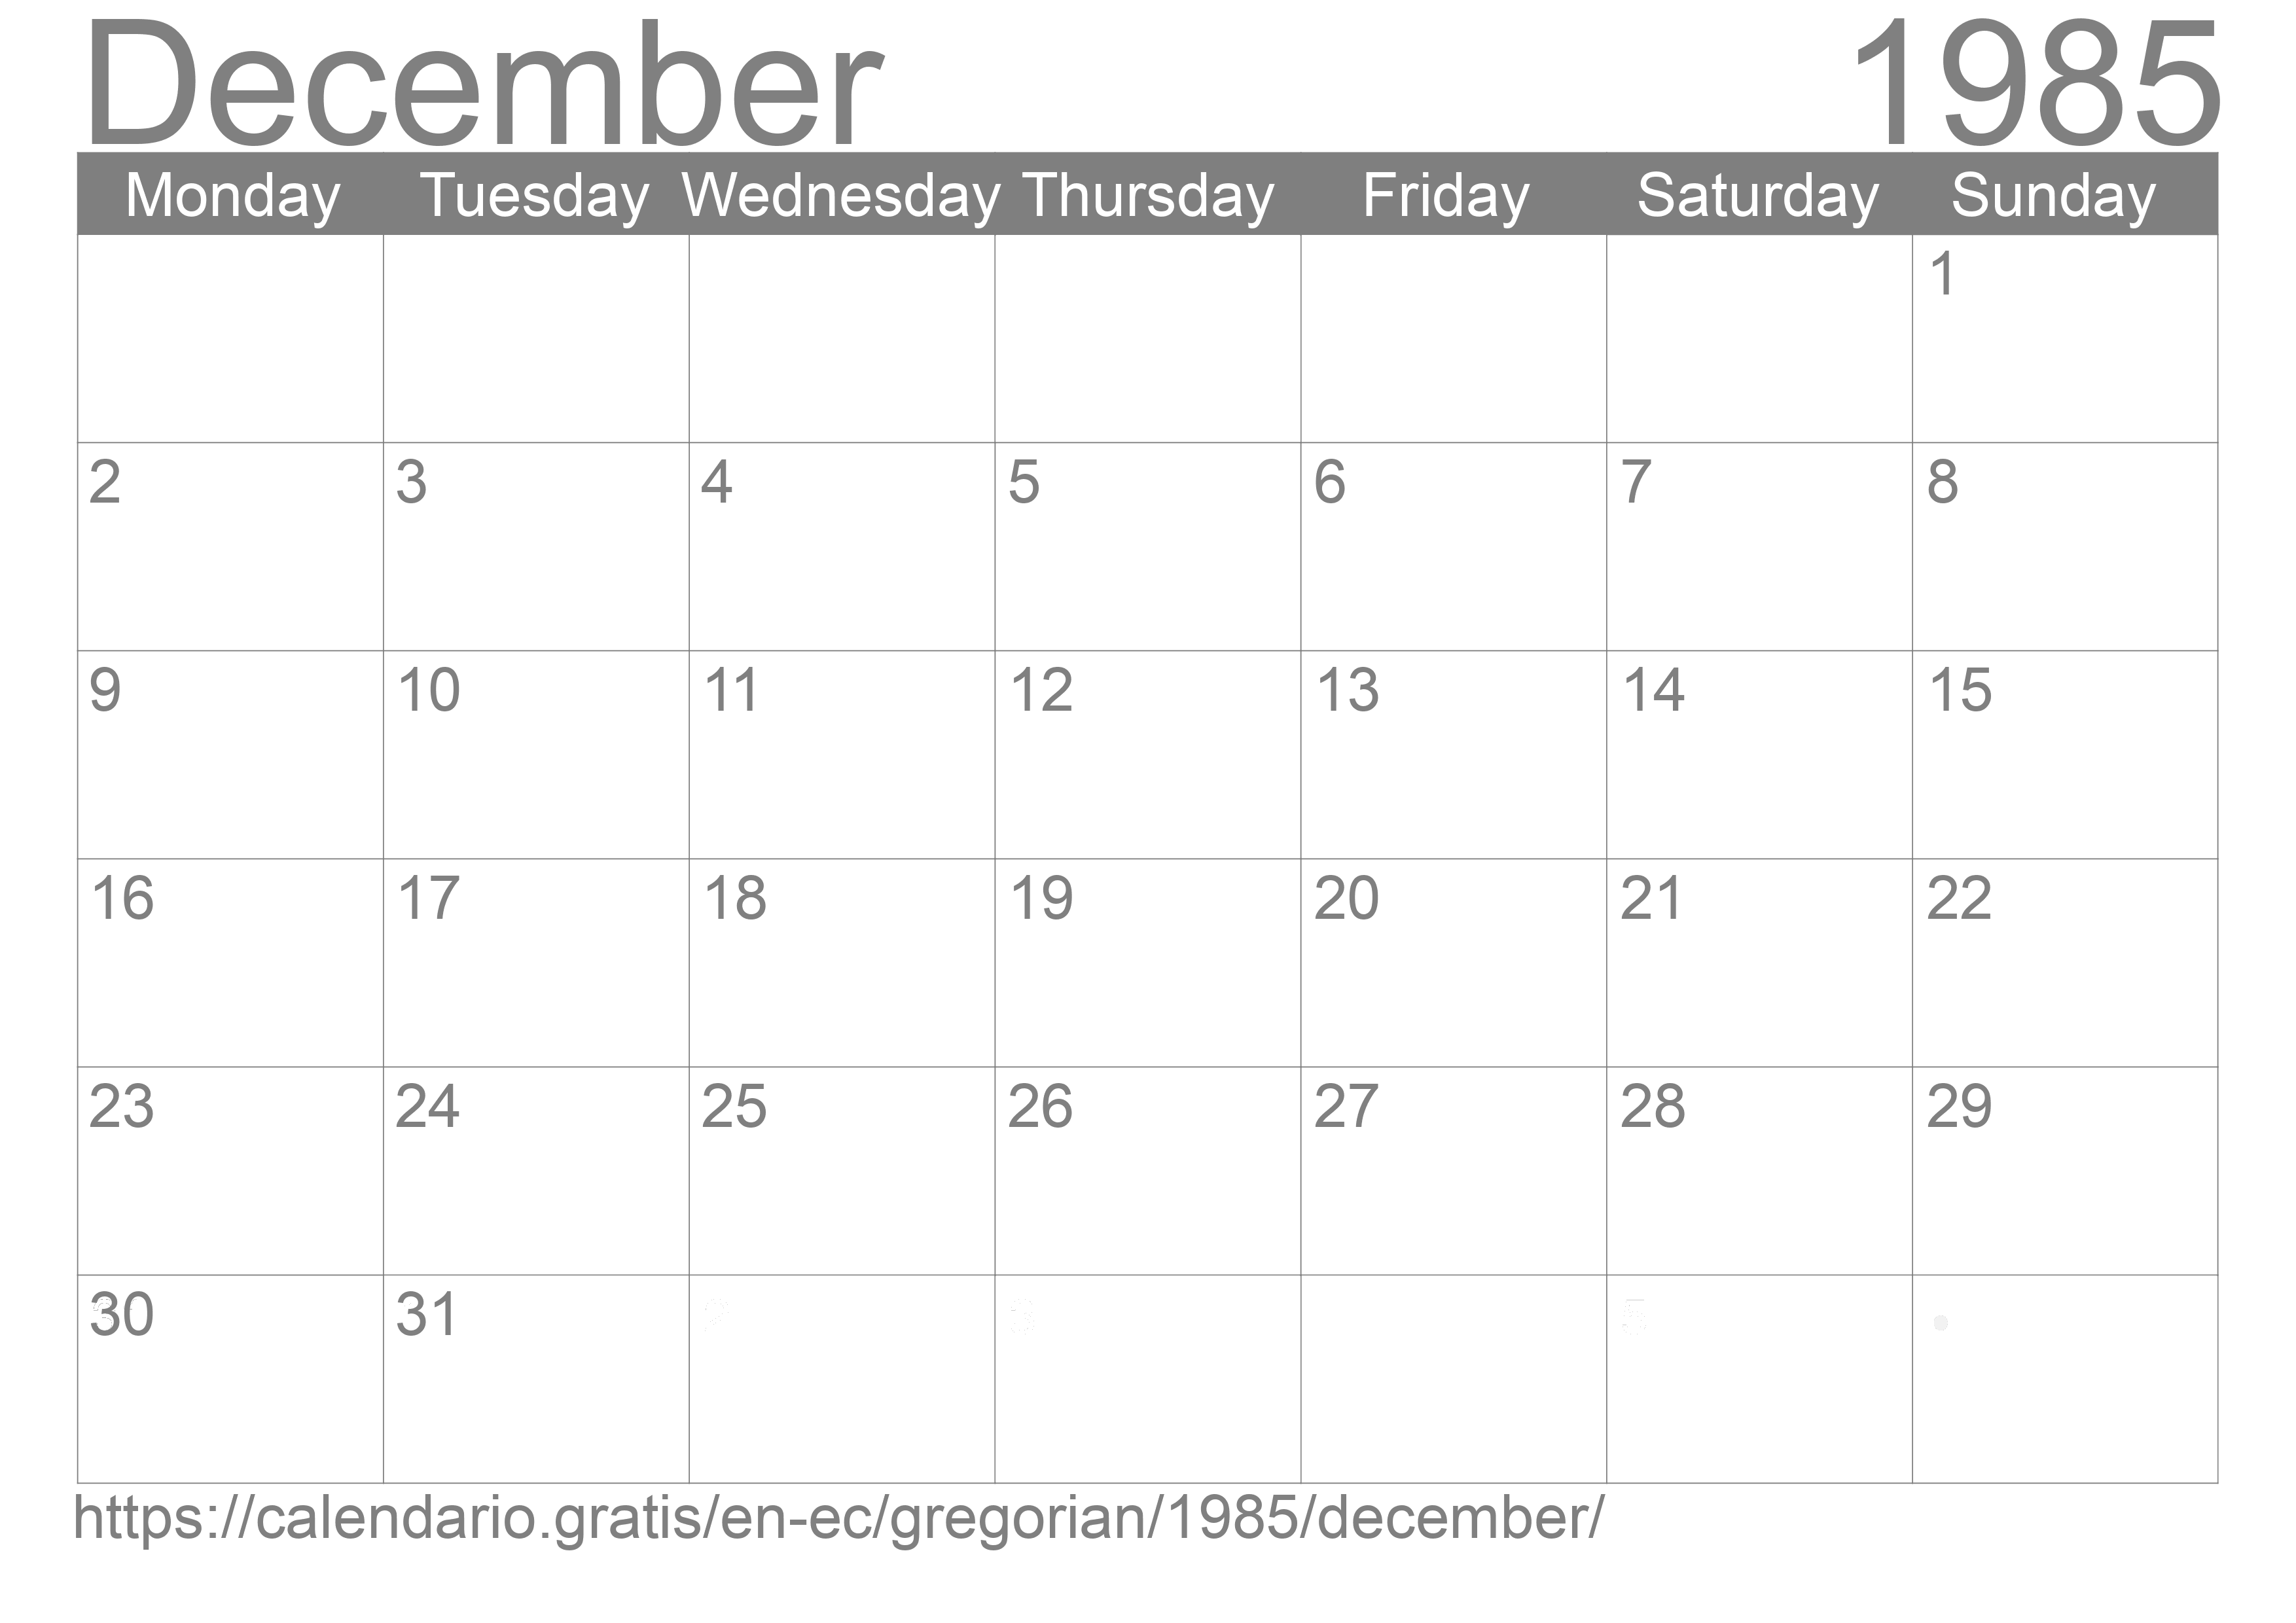 Calendar December 1985 to print